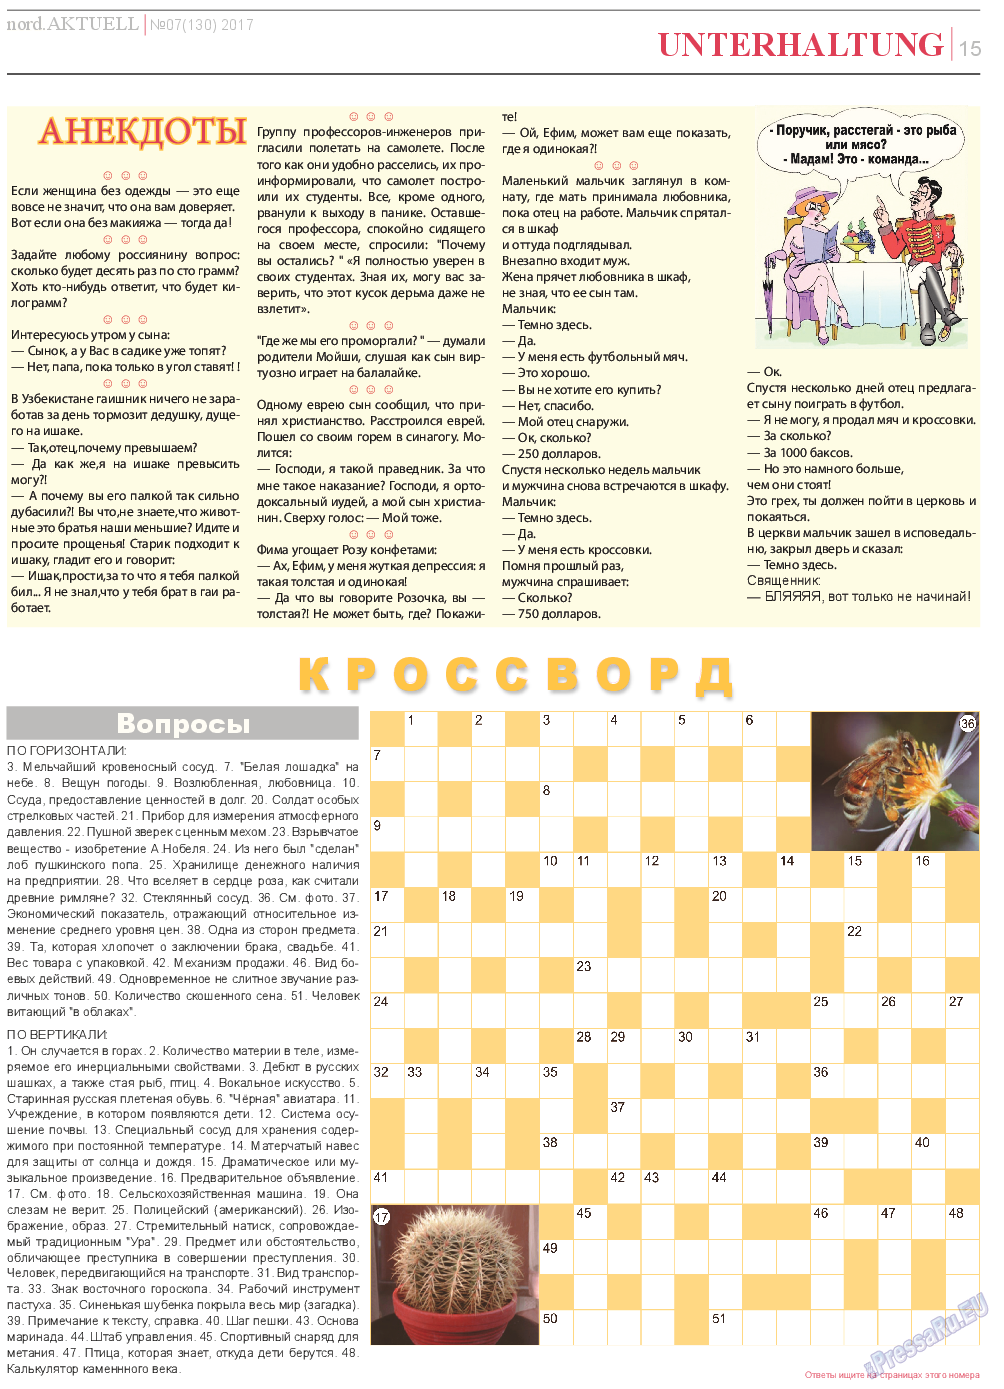 nord.Aktuell, газета. 2017 №7 стр.15